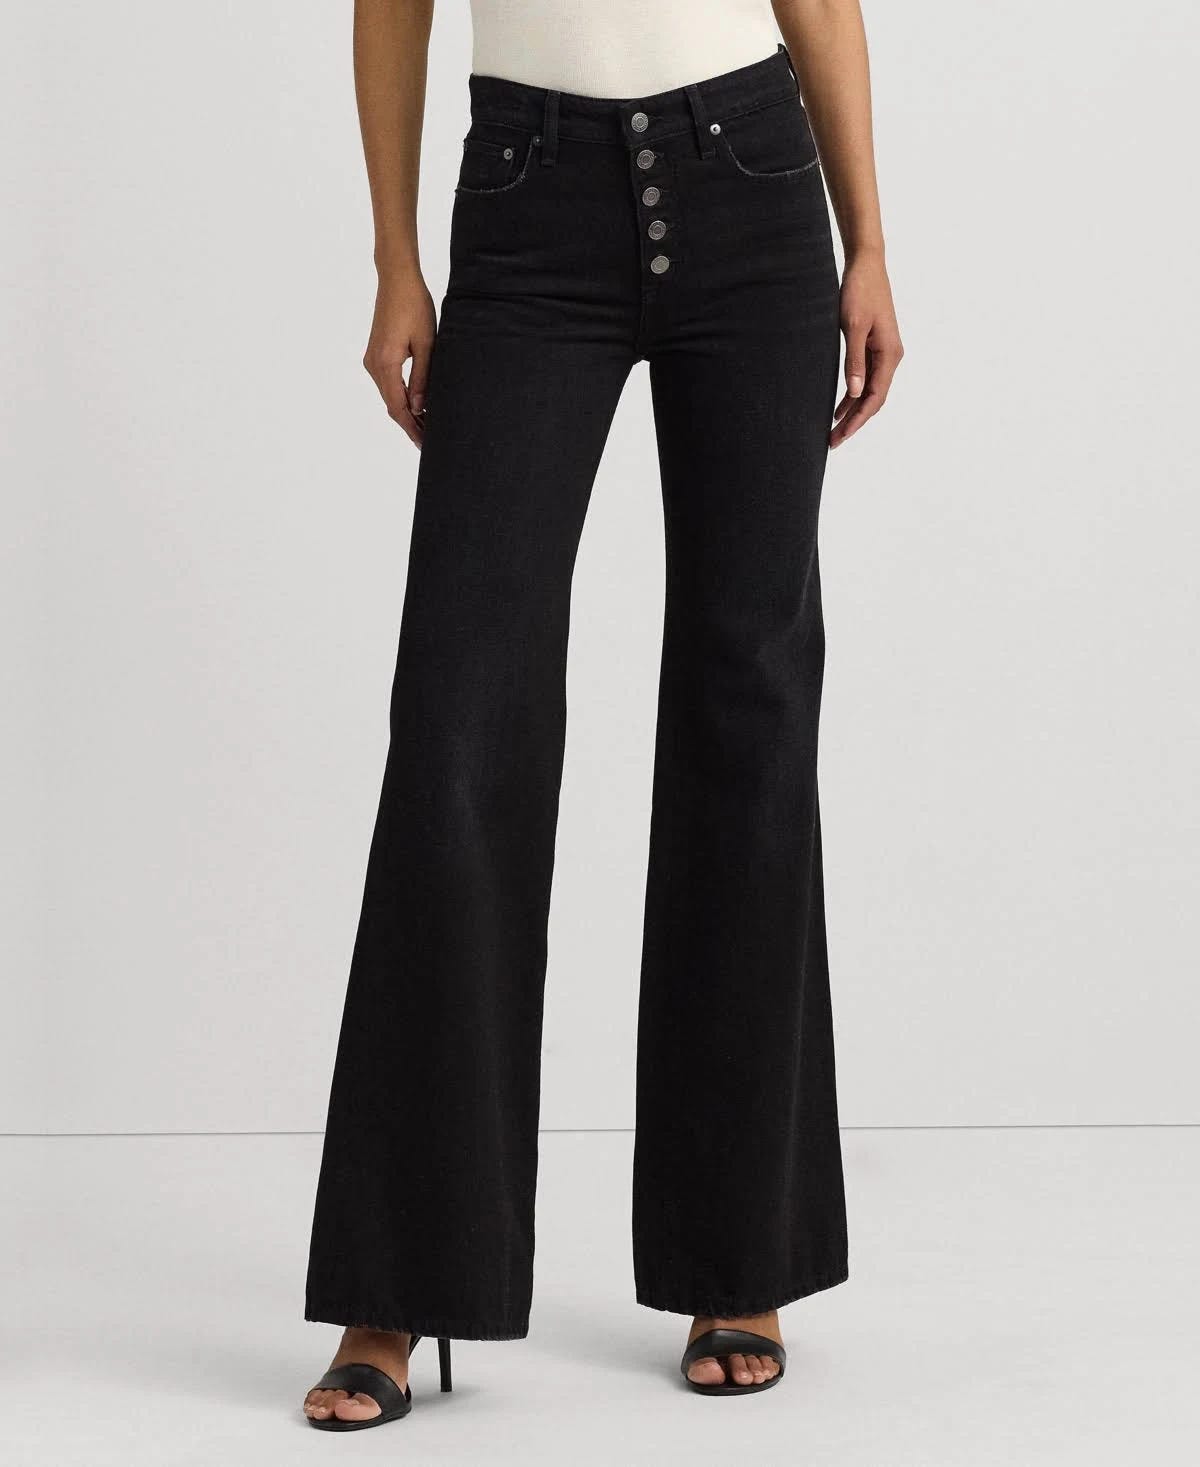 Premium Black Wash Petite High-Rise Flare Jeans by Lauren Ralph Lauren | Image